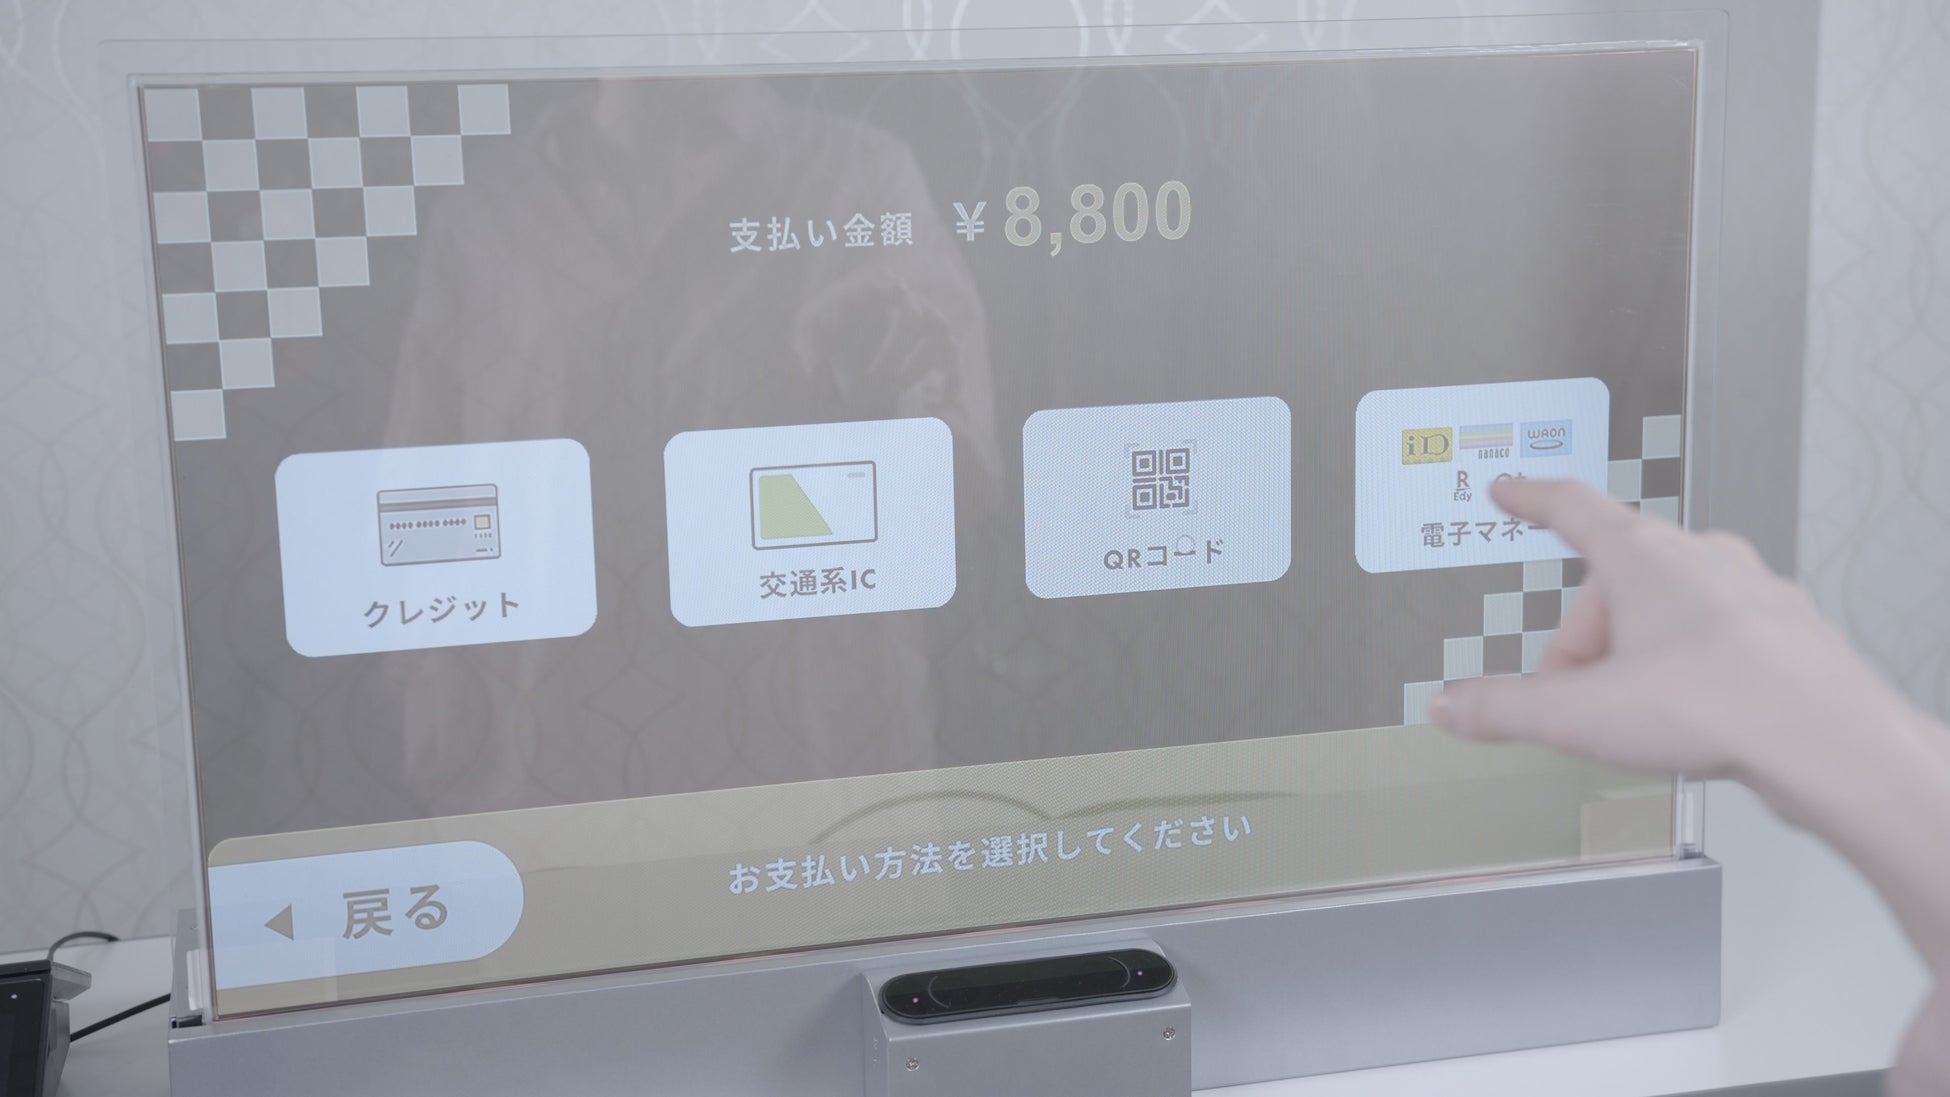 AVR Japan株式会社と、ものまねタレントコロッケが役員を務める株式会社アクアの共同制作による「五木ロボット工場」のバーチャルプロダクション動画を公開！のサブ画像5